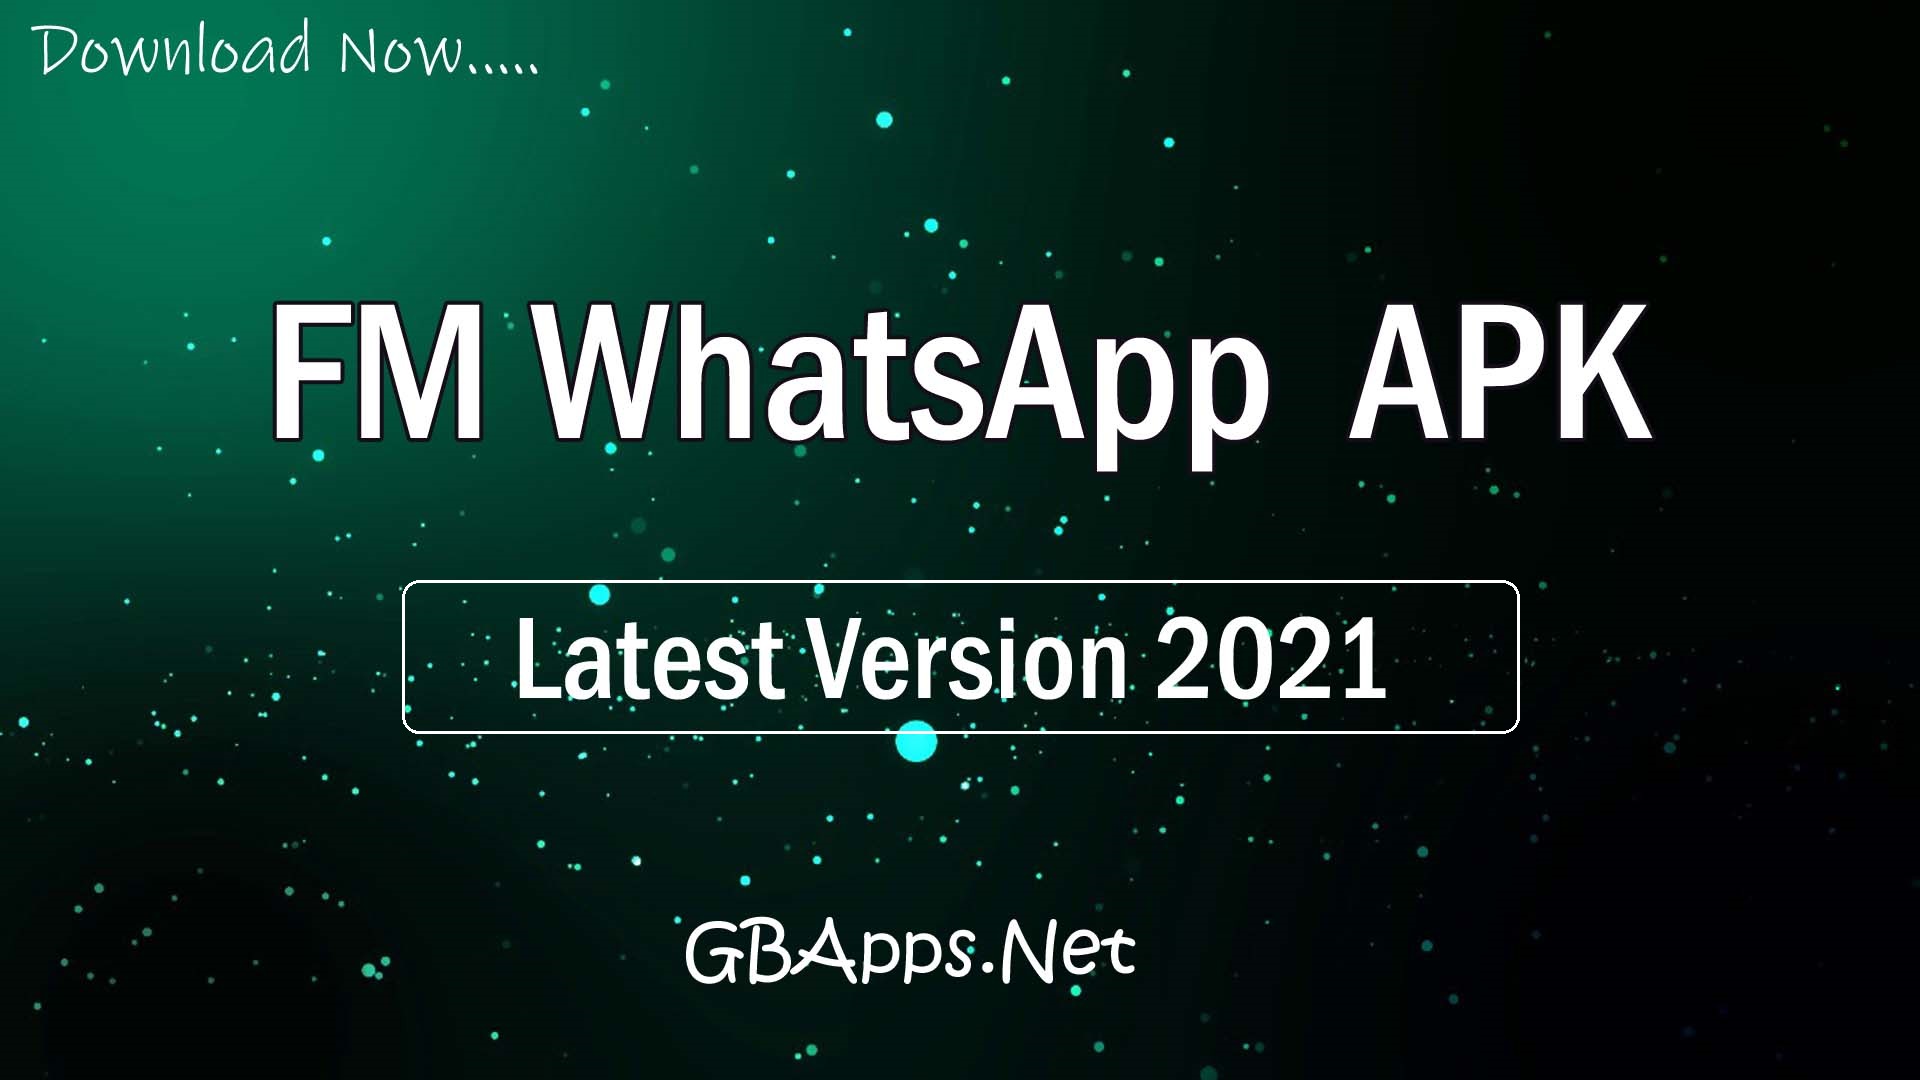 whatsapp download 2021 new version download whatsapp downloads